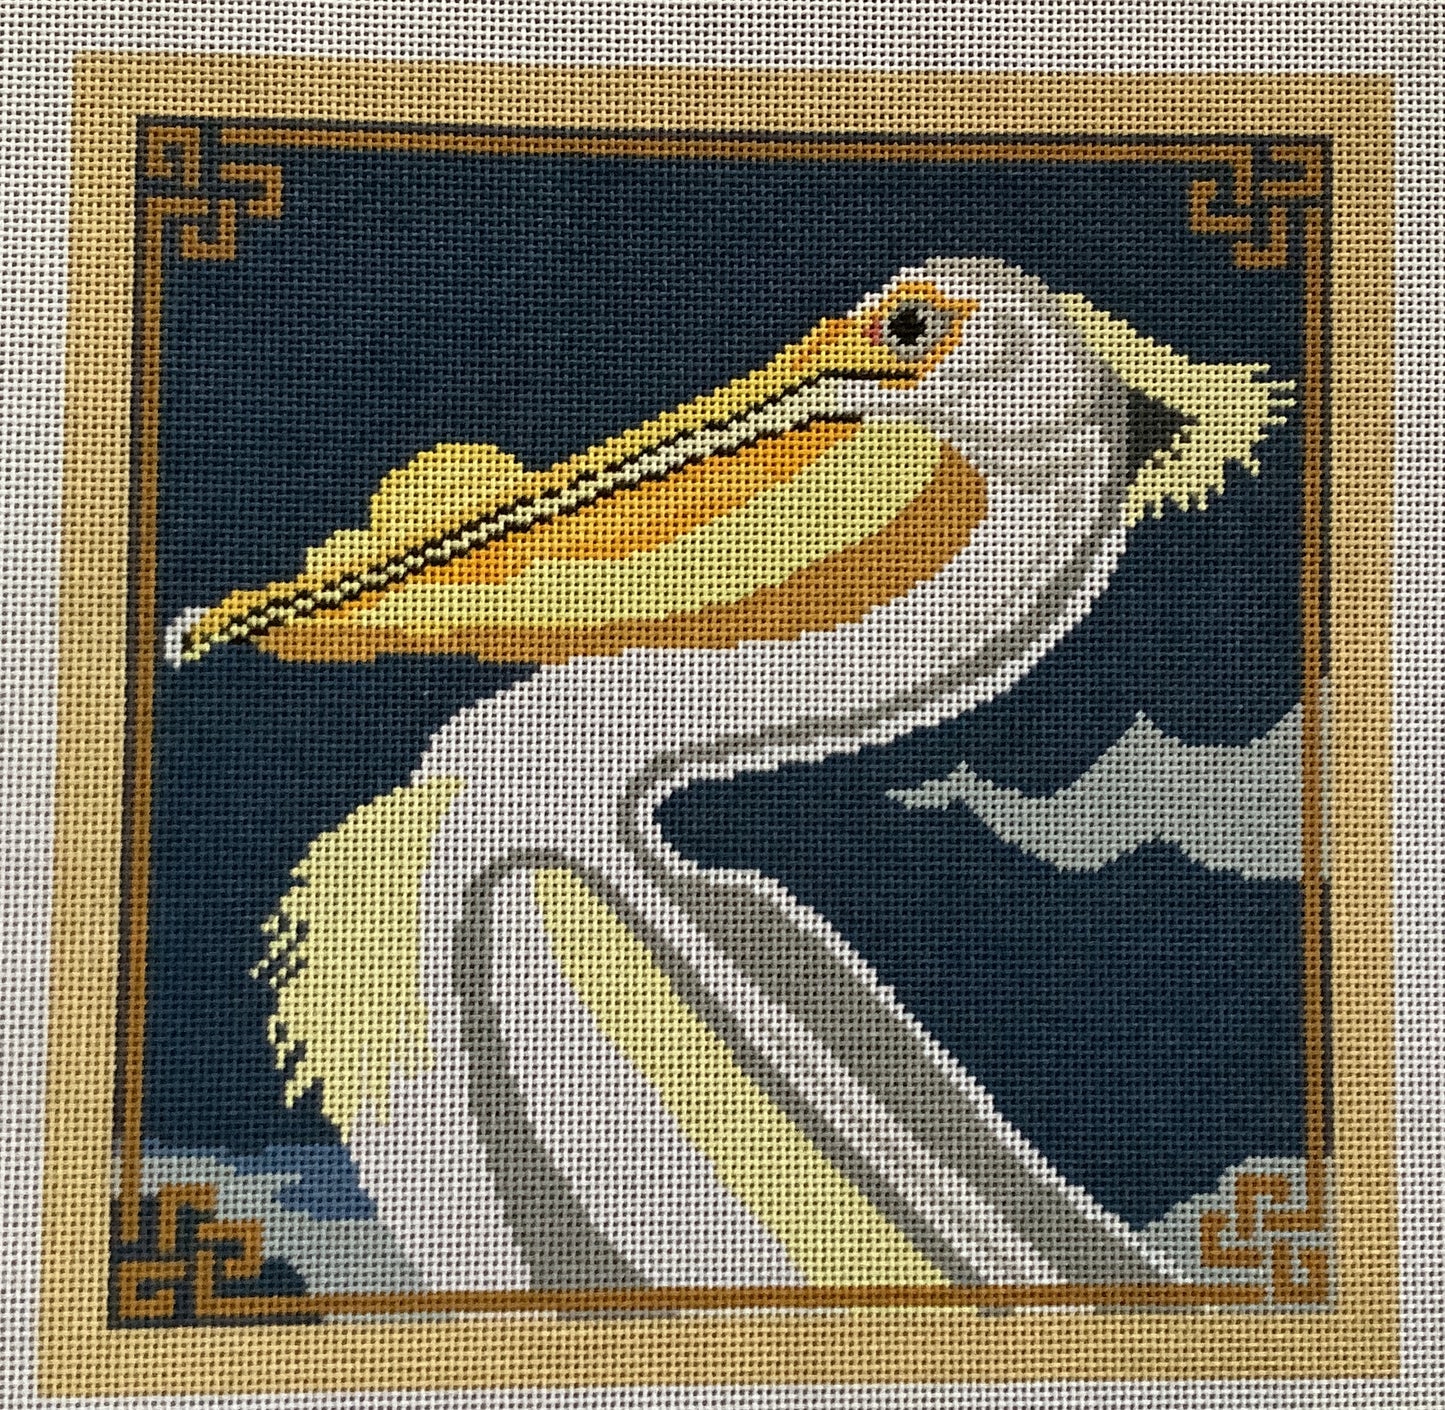 Audubon Pelican